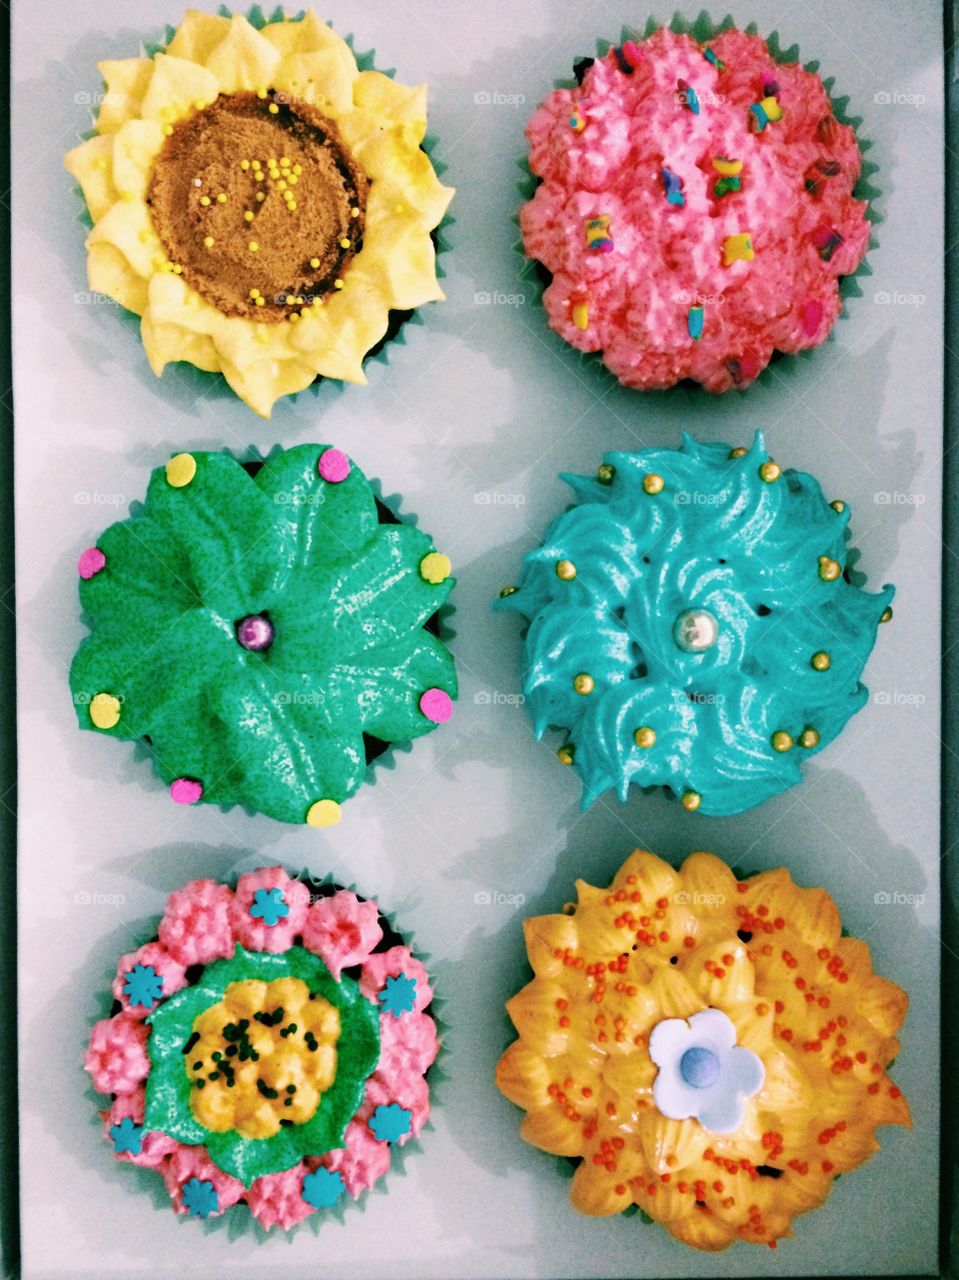 Crazy cupcakes!